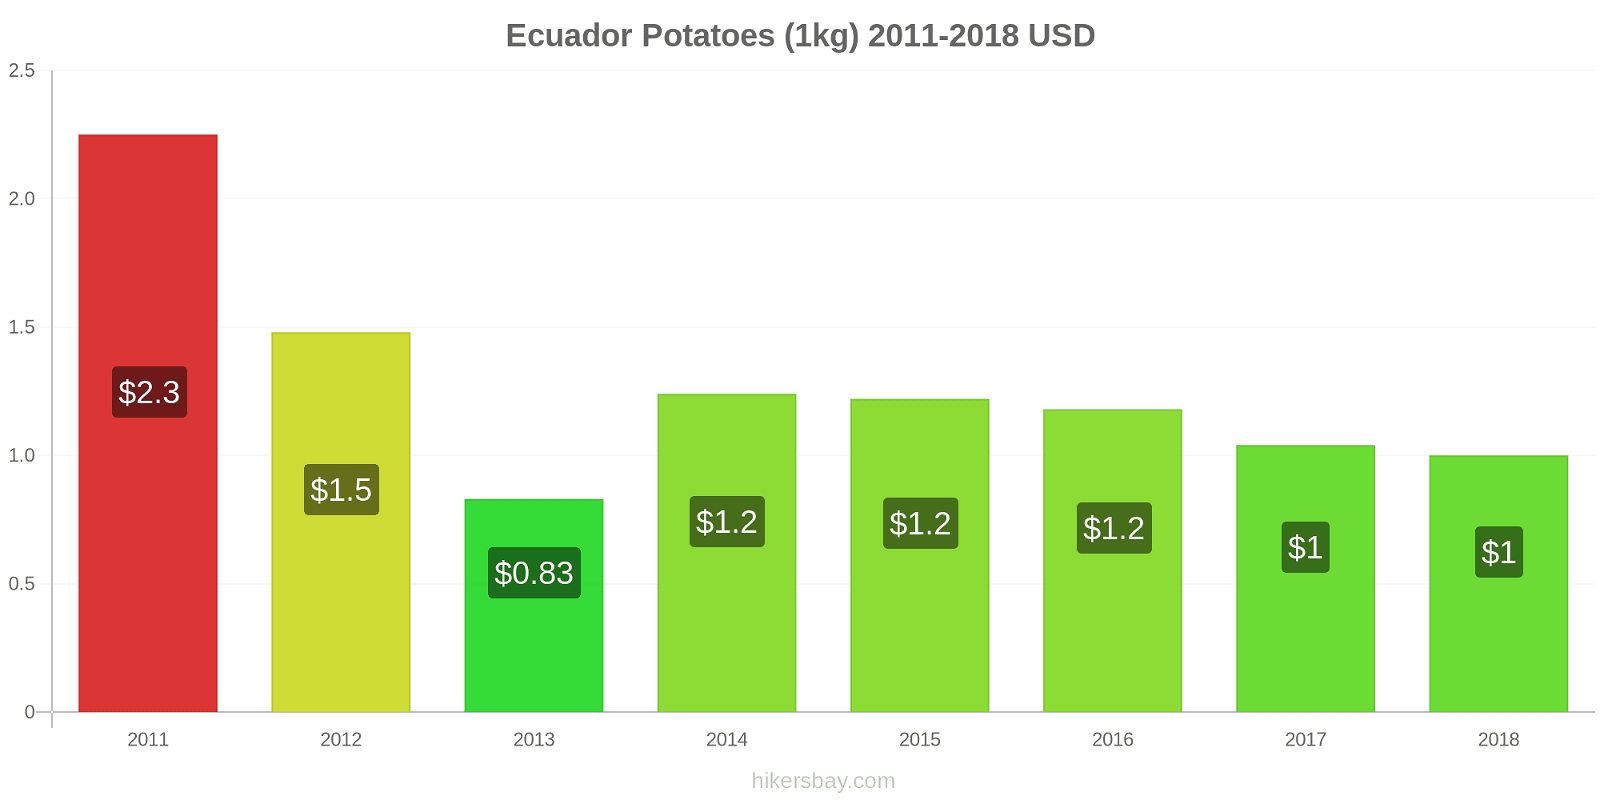 Ecuador price changes Potatoes (1kg) hikersbay.com